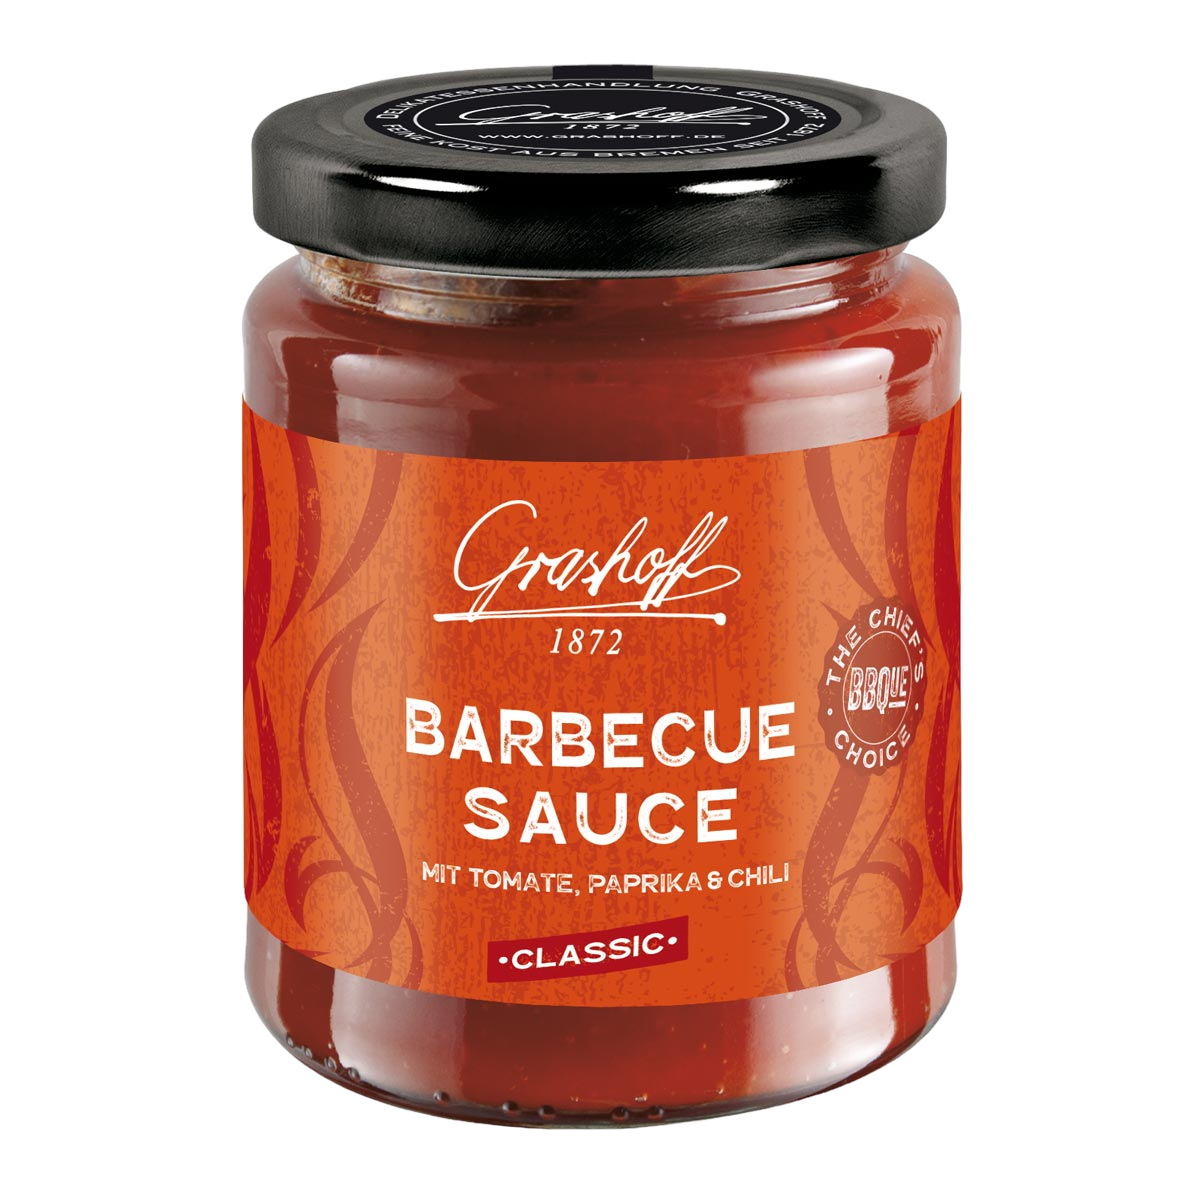 BBQue barbecue sauce